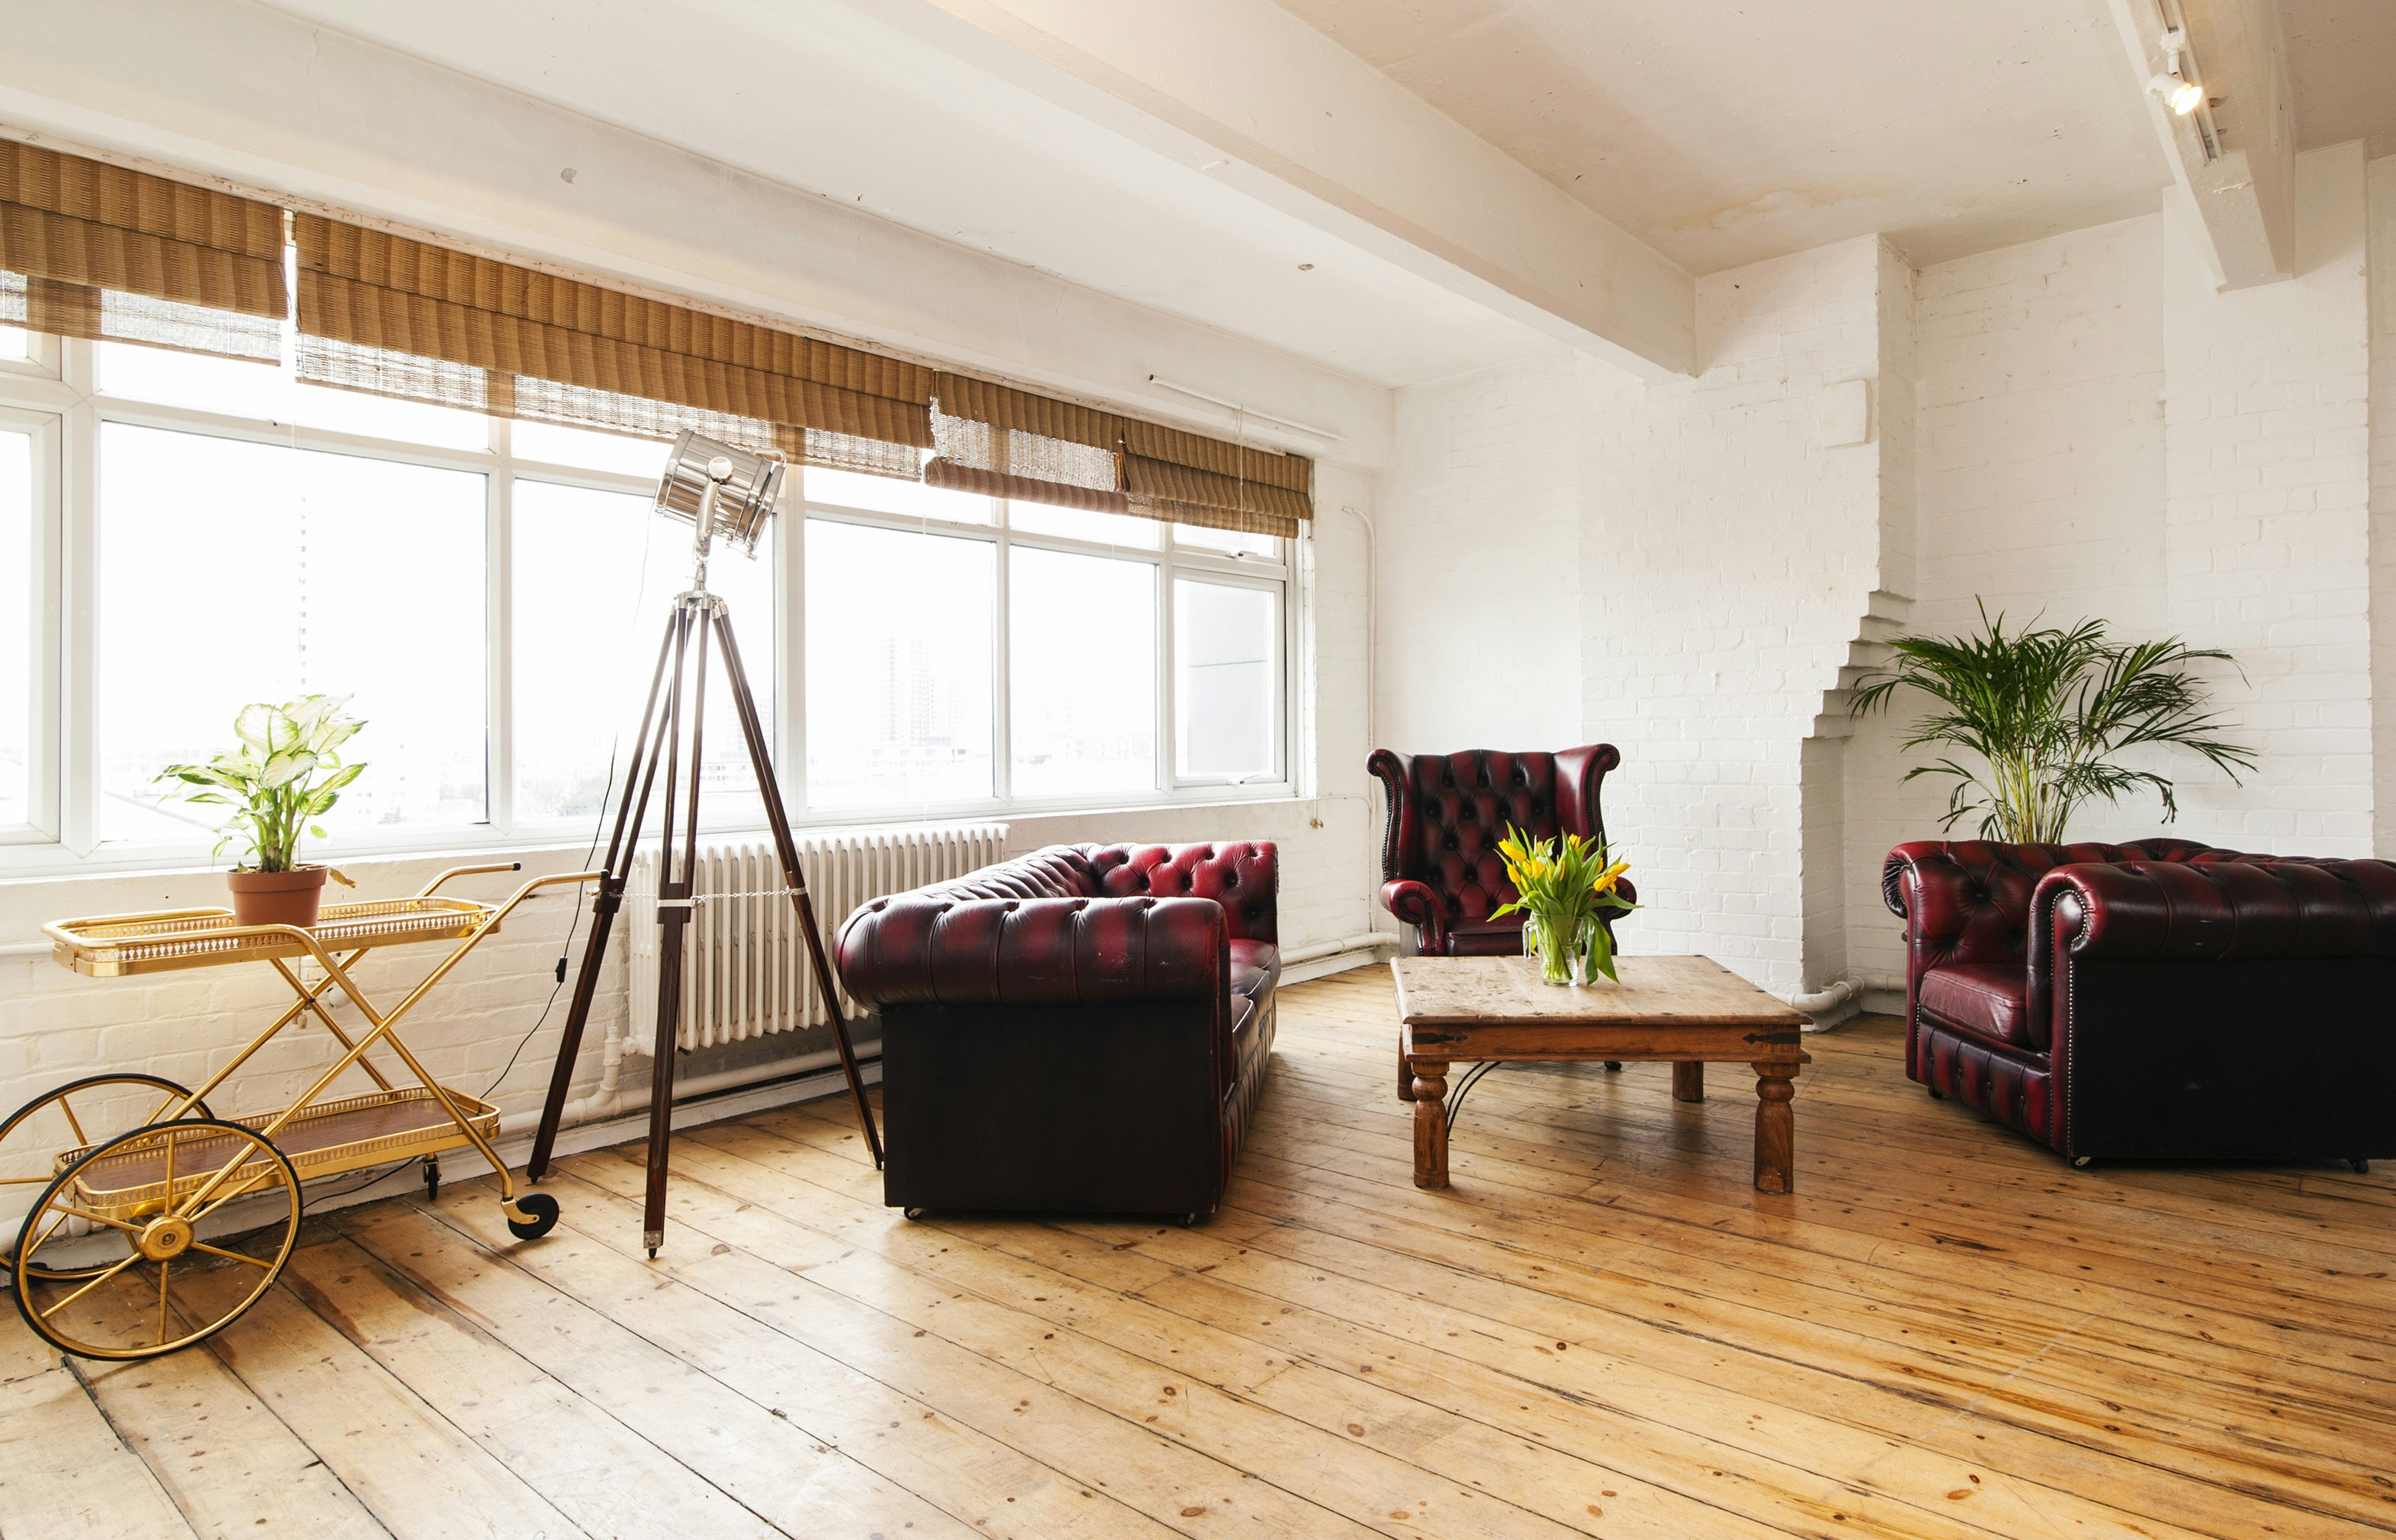 Filming Locations Venues in South London - 4th Floor Studios